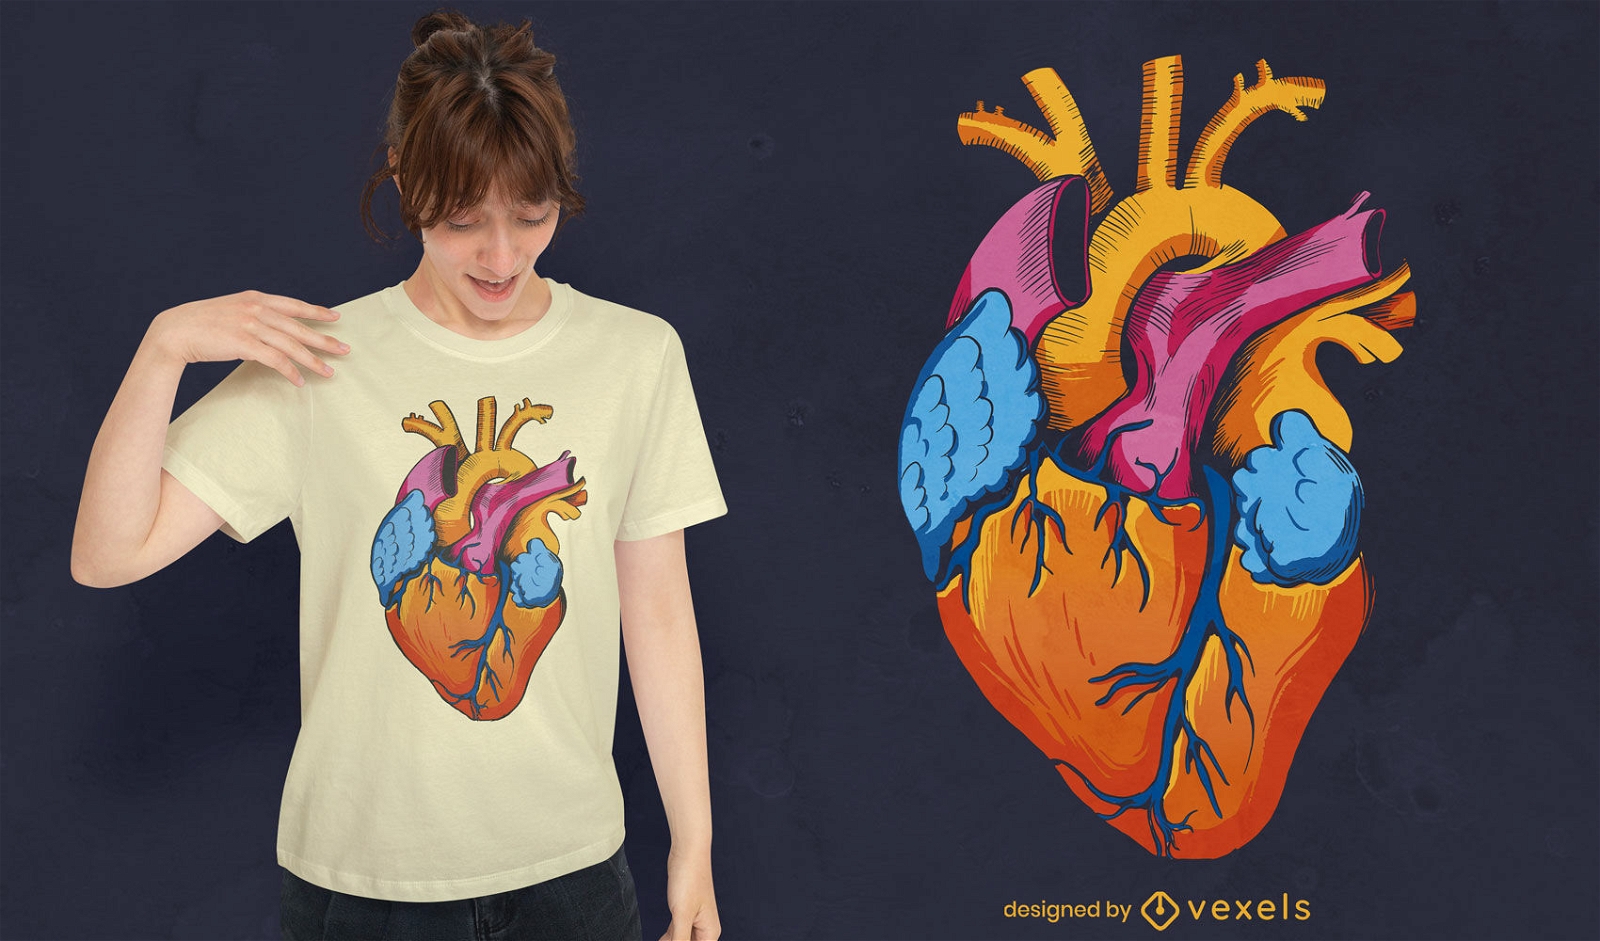 Heart anatomy t-shirt design